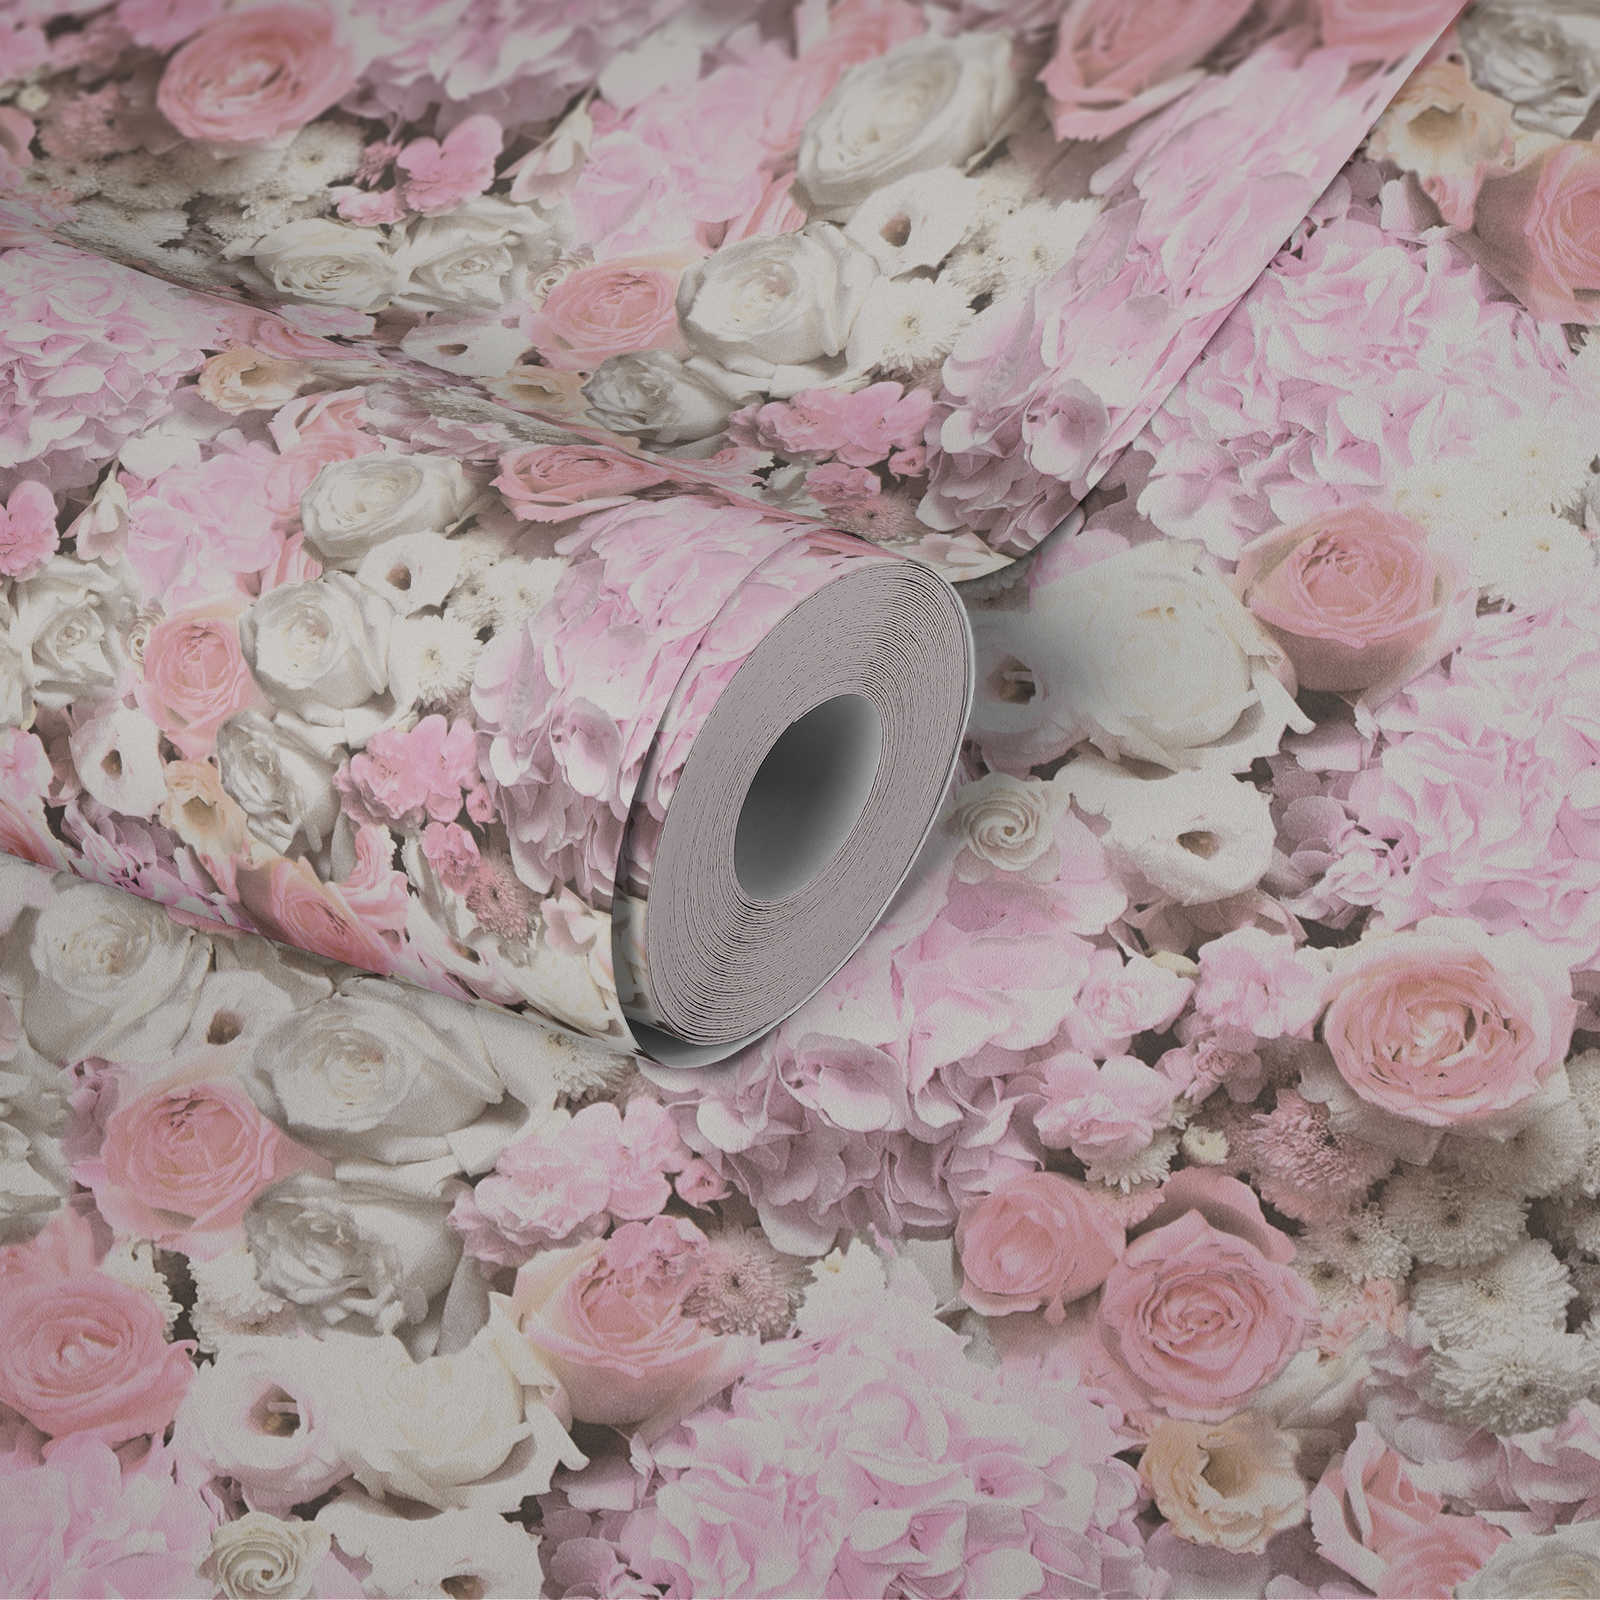             Tapete Rosen & Blüten Muster – Rosa, Weiß
        